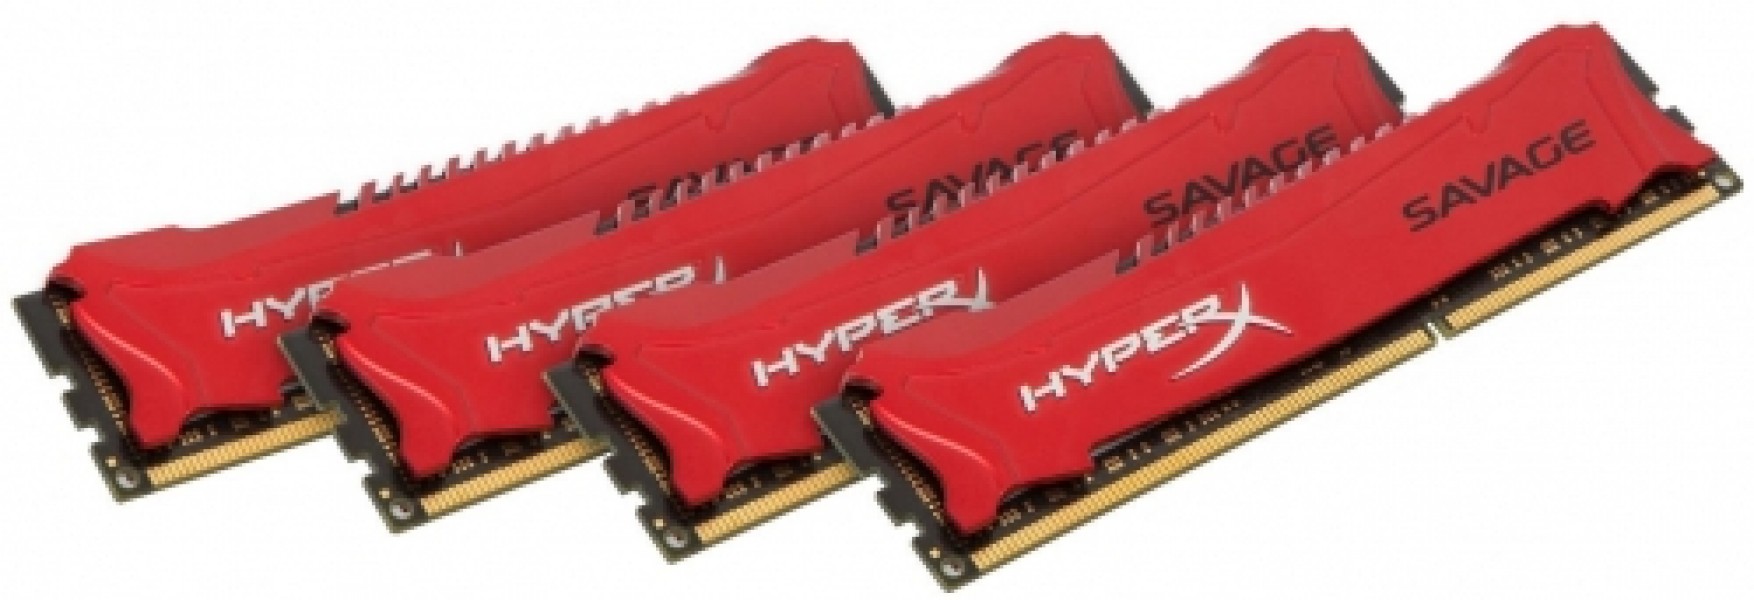 DDR3 Kingston HyperX Savage Red 32GB (4x8GB) 1600MHz CL9